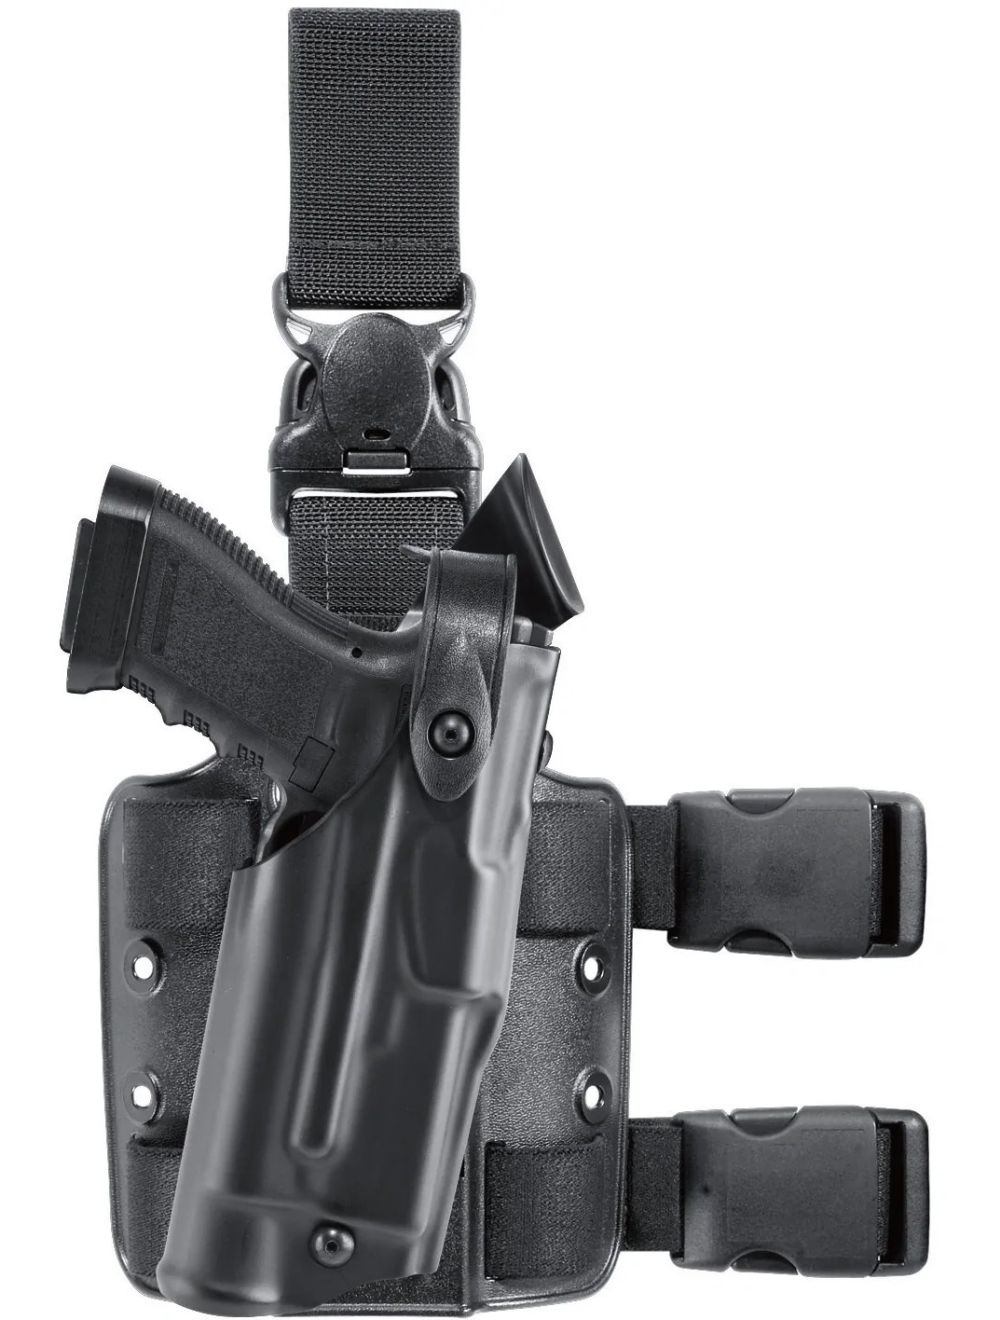 Model 6305 ALS/SLS Tactical Holster w/ Quick-Release Leg Strap for Glock 17 w/ Light